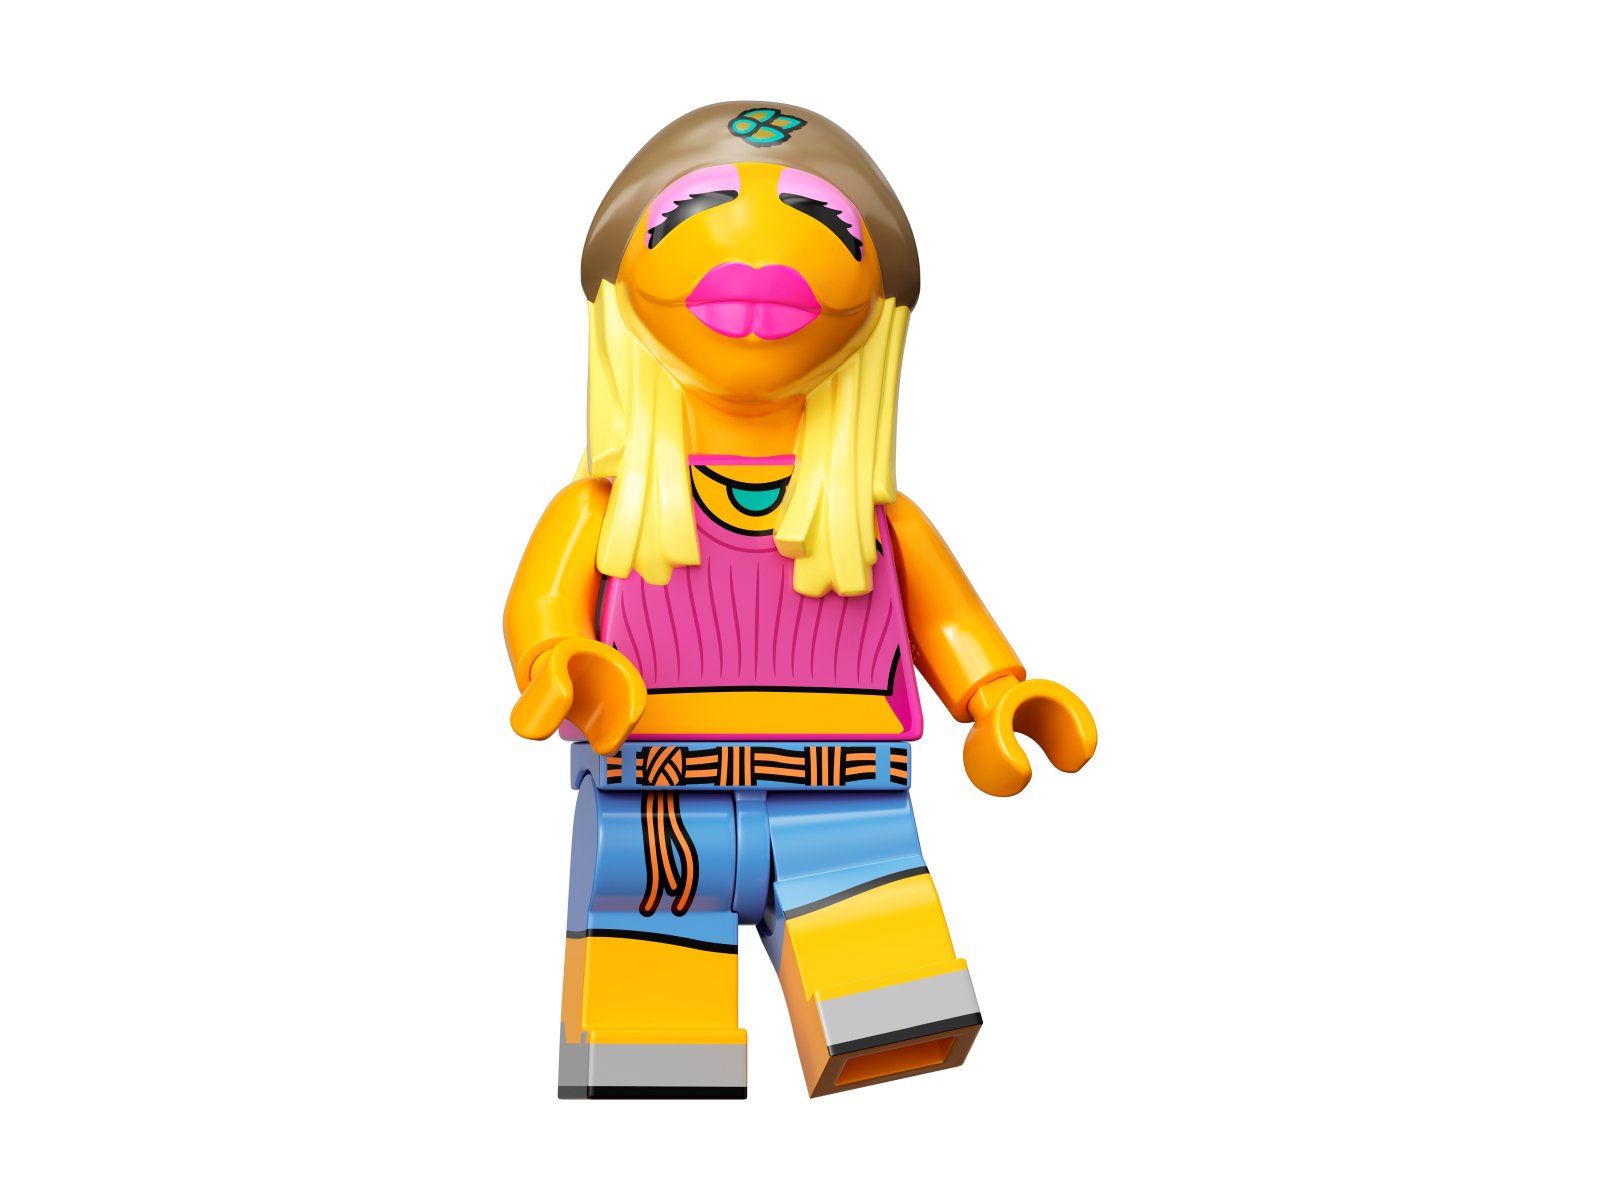 LEGO 71033 Minifigures Muppety